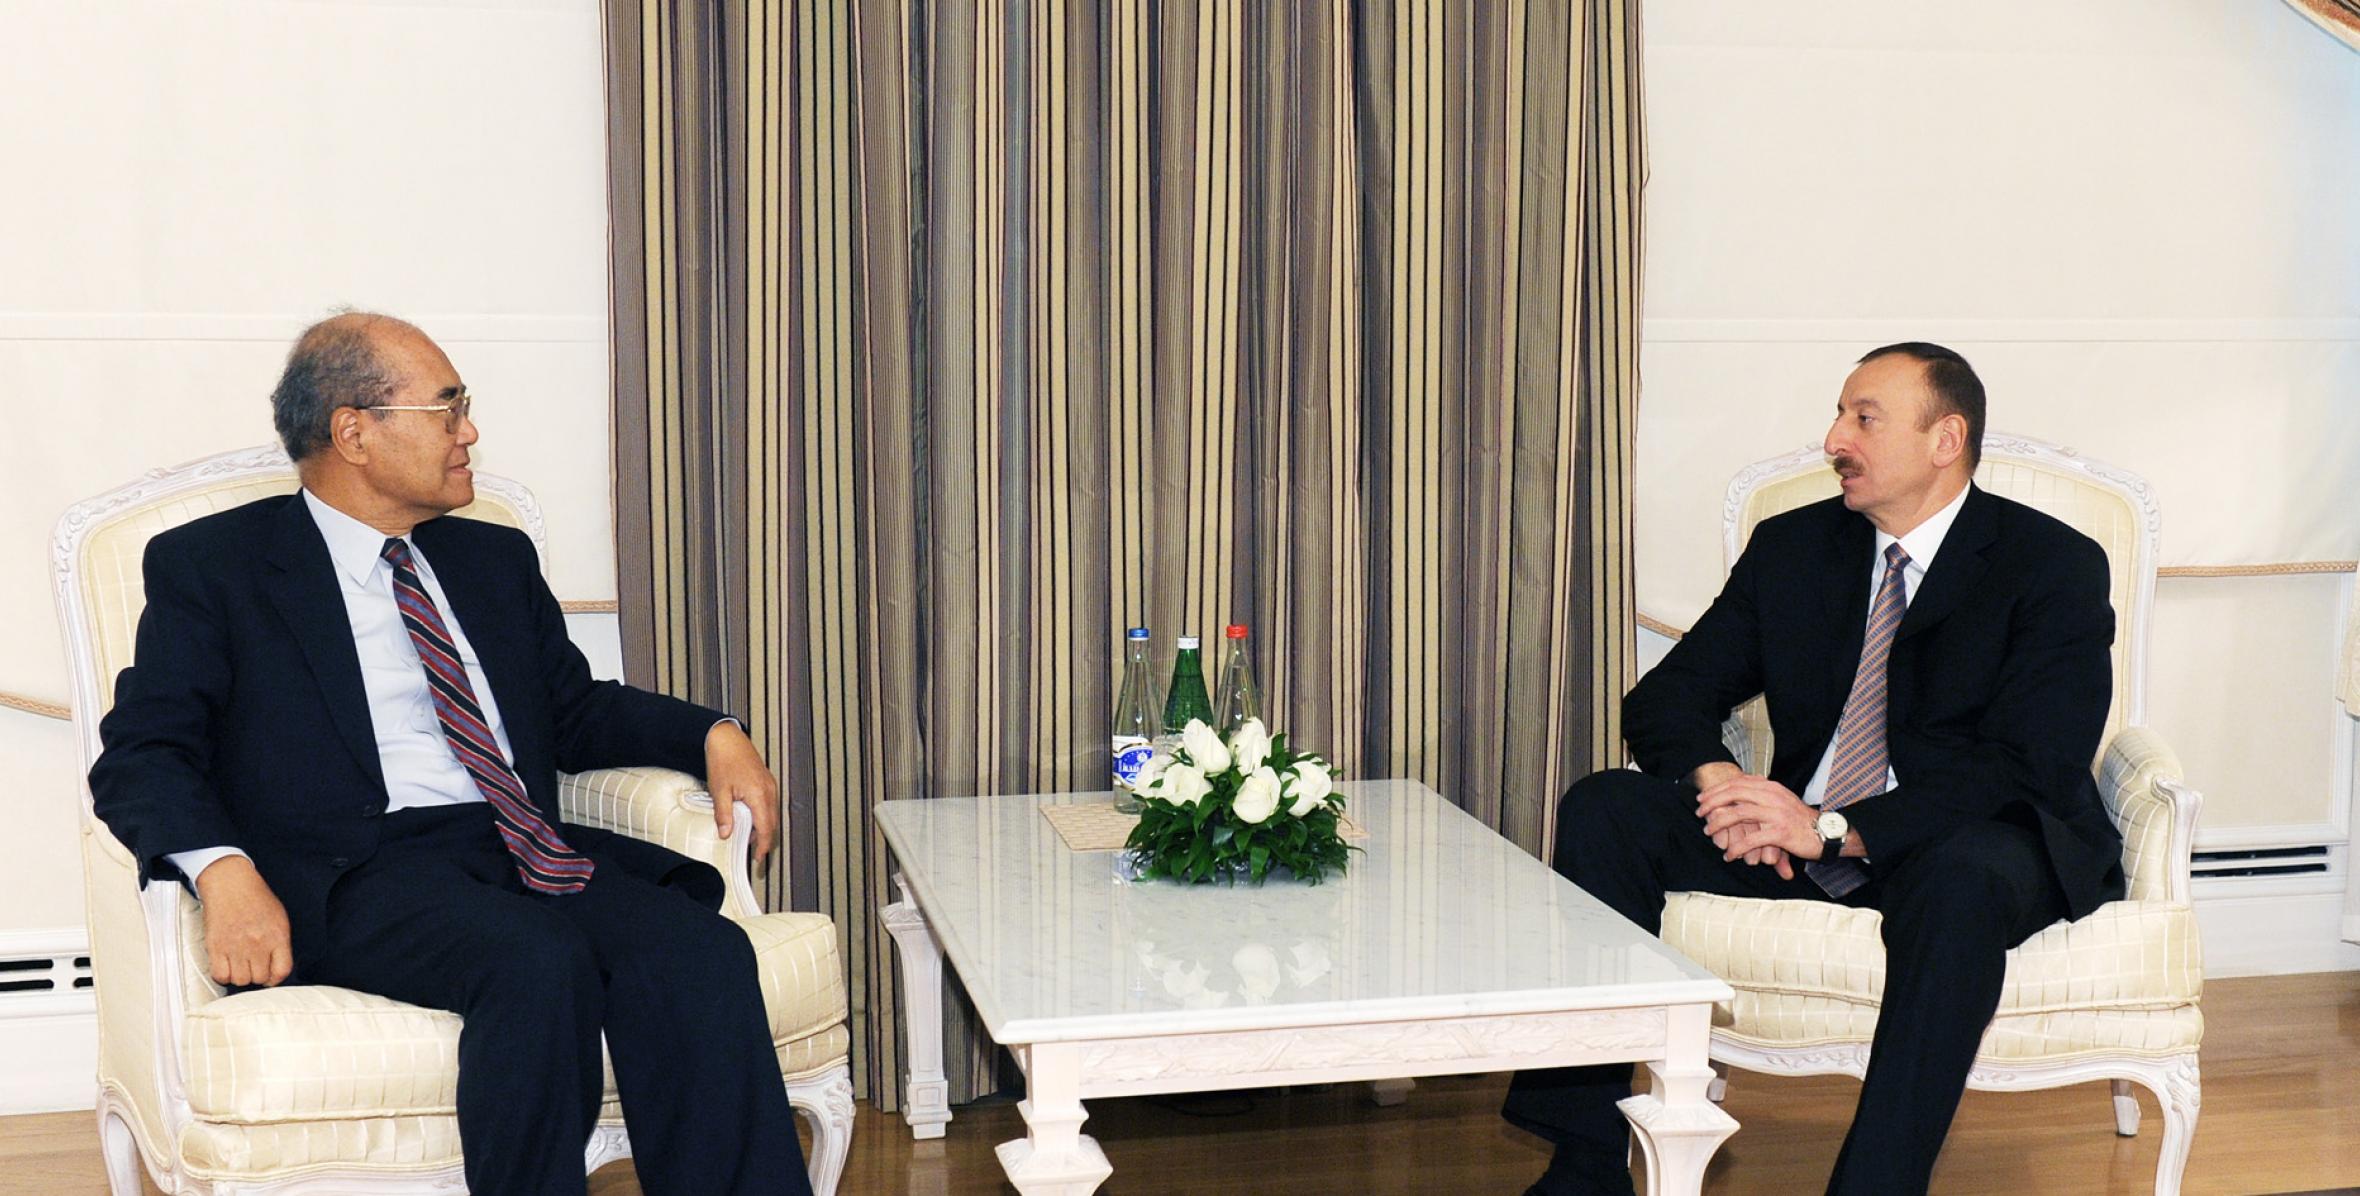 Ilham Aliyev received former UNESCO Director General Koïchiro Matsuura